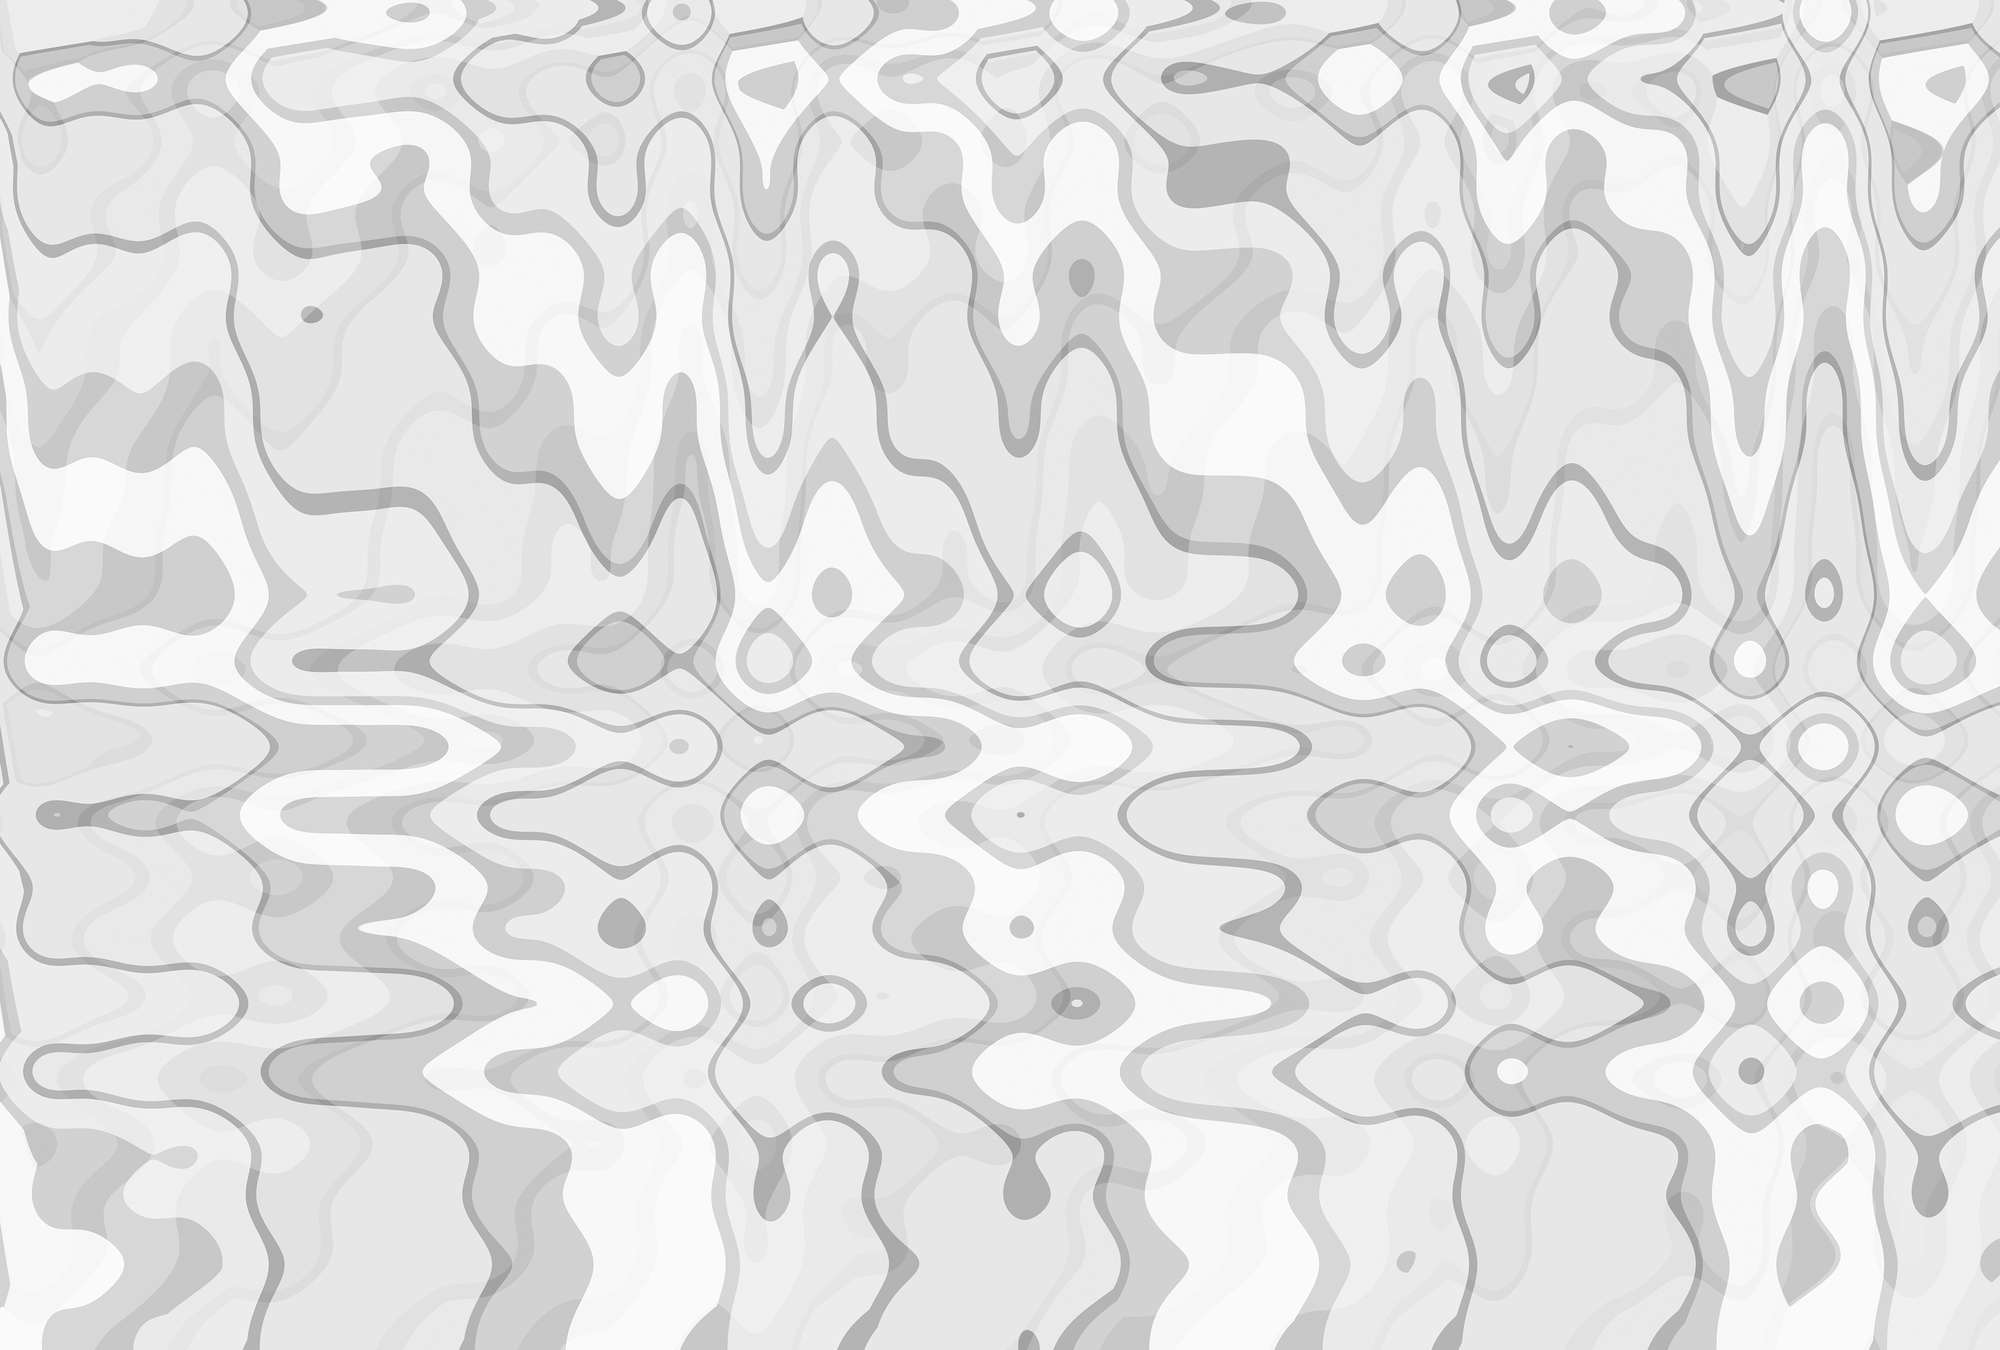             Retro abstract design wallpaper - grey, white
        